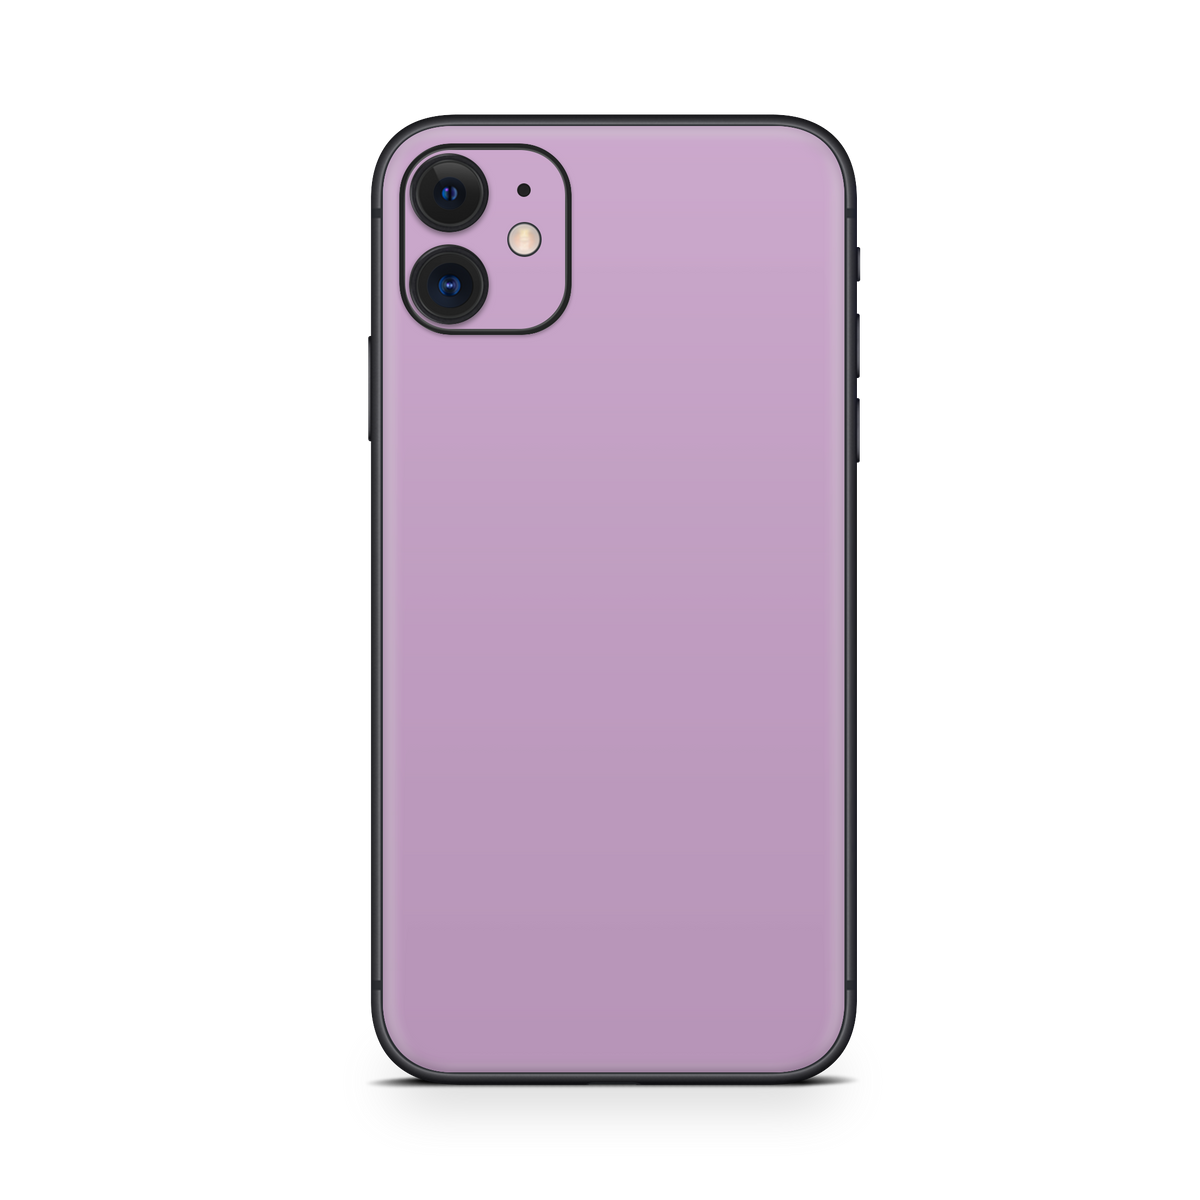 Apple iPhone 11 Soft Lilac Skin